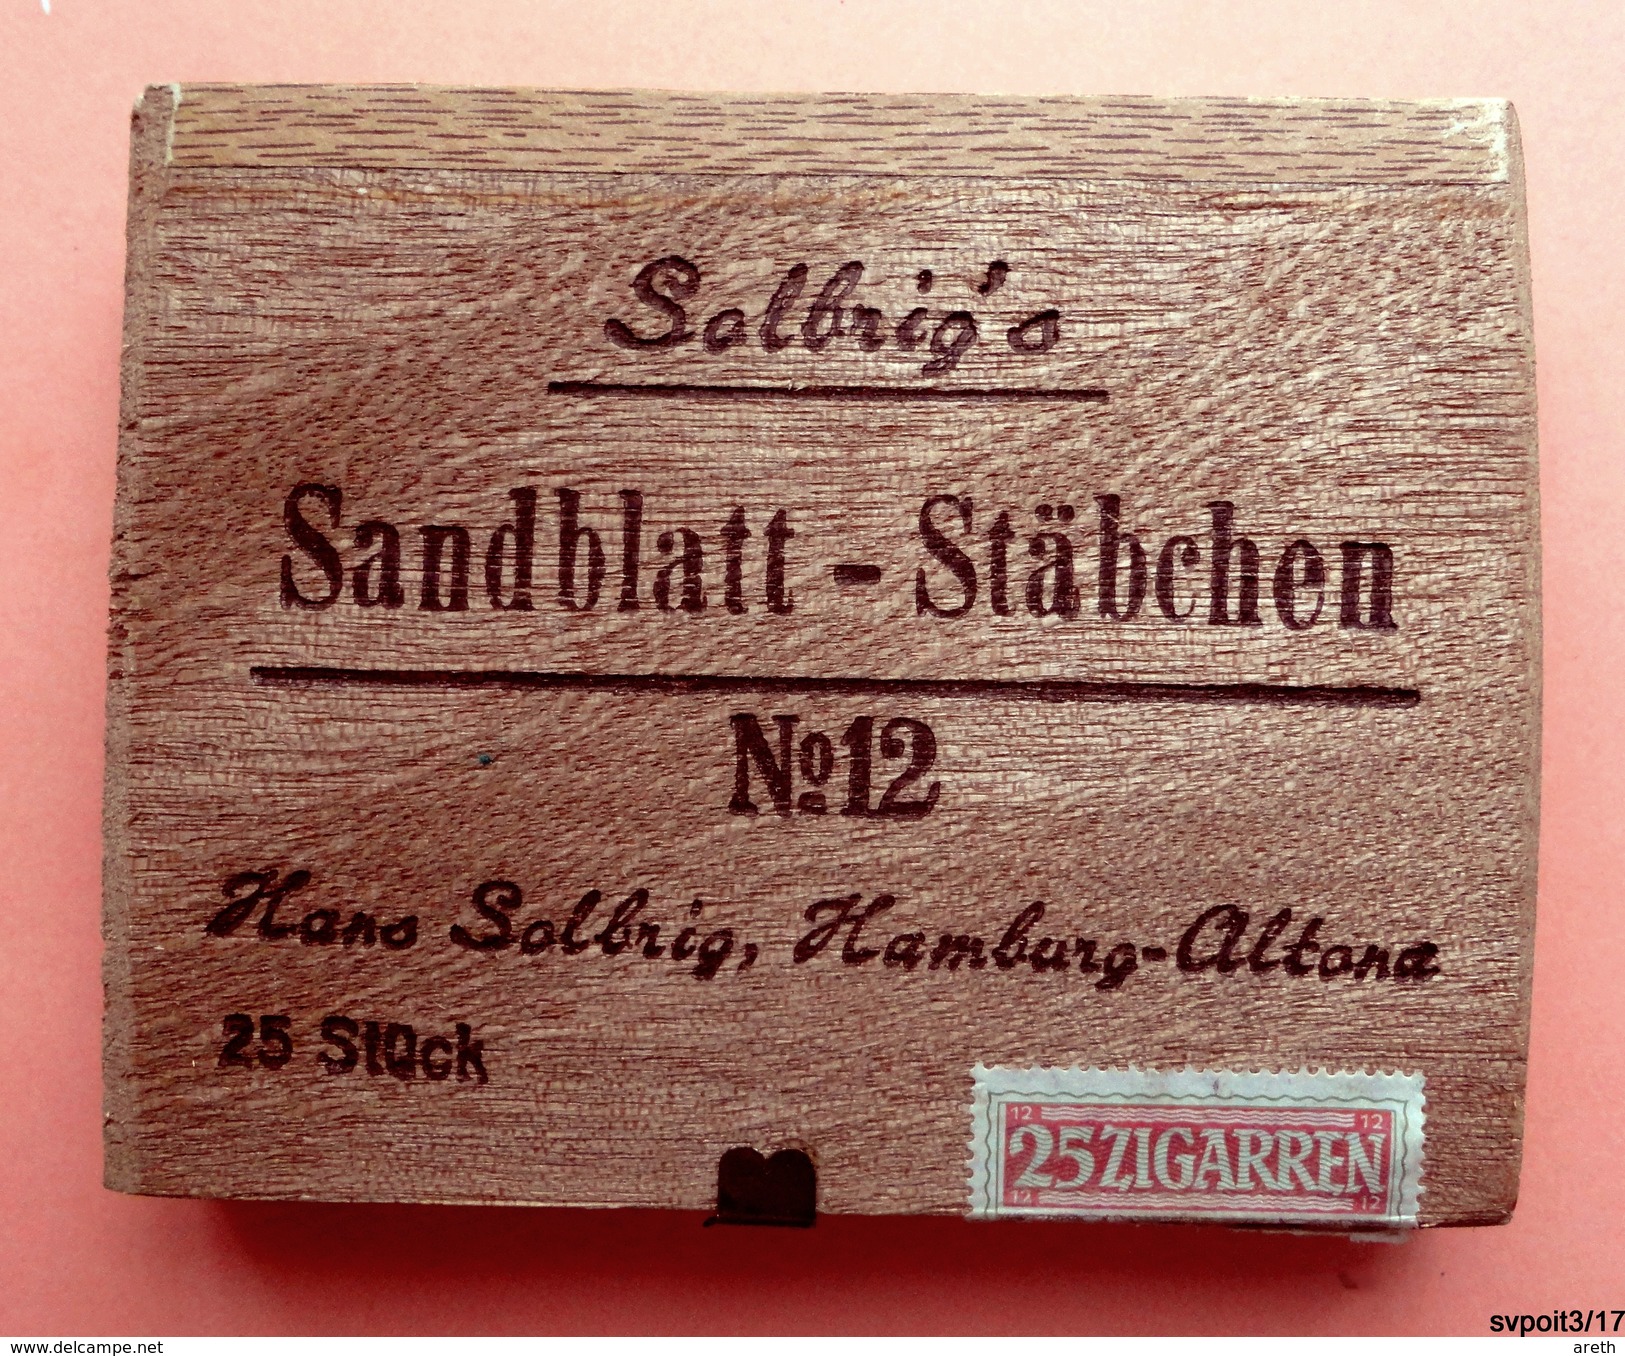 Boite De Cigares  Vide  En Bois - SOLBRIG'S SANDBLATT - STÄBCHEN N°12 - Hans Solbrig, Hamburg Altona - Boites à Tabac Vides